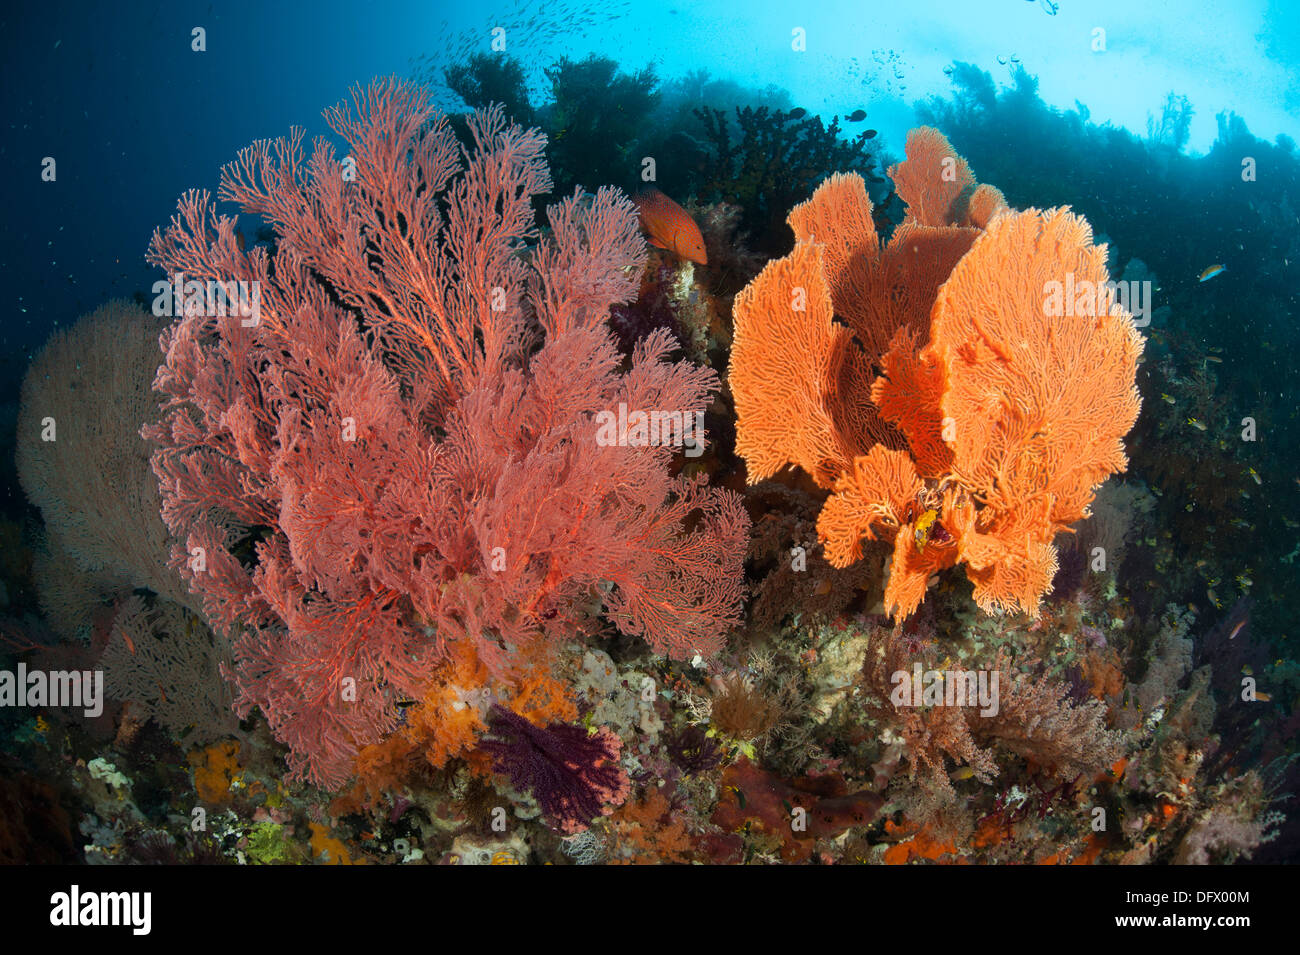 In Reefscape Raja Ampat ricoperto di gorgonie, Papua occidentale, in Indonesia. Foto Stock